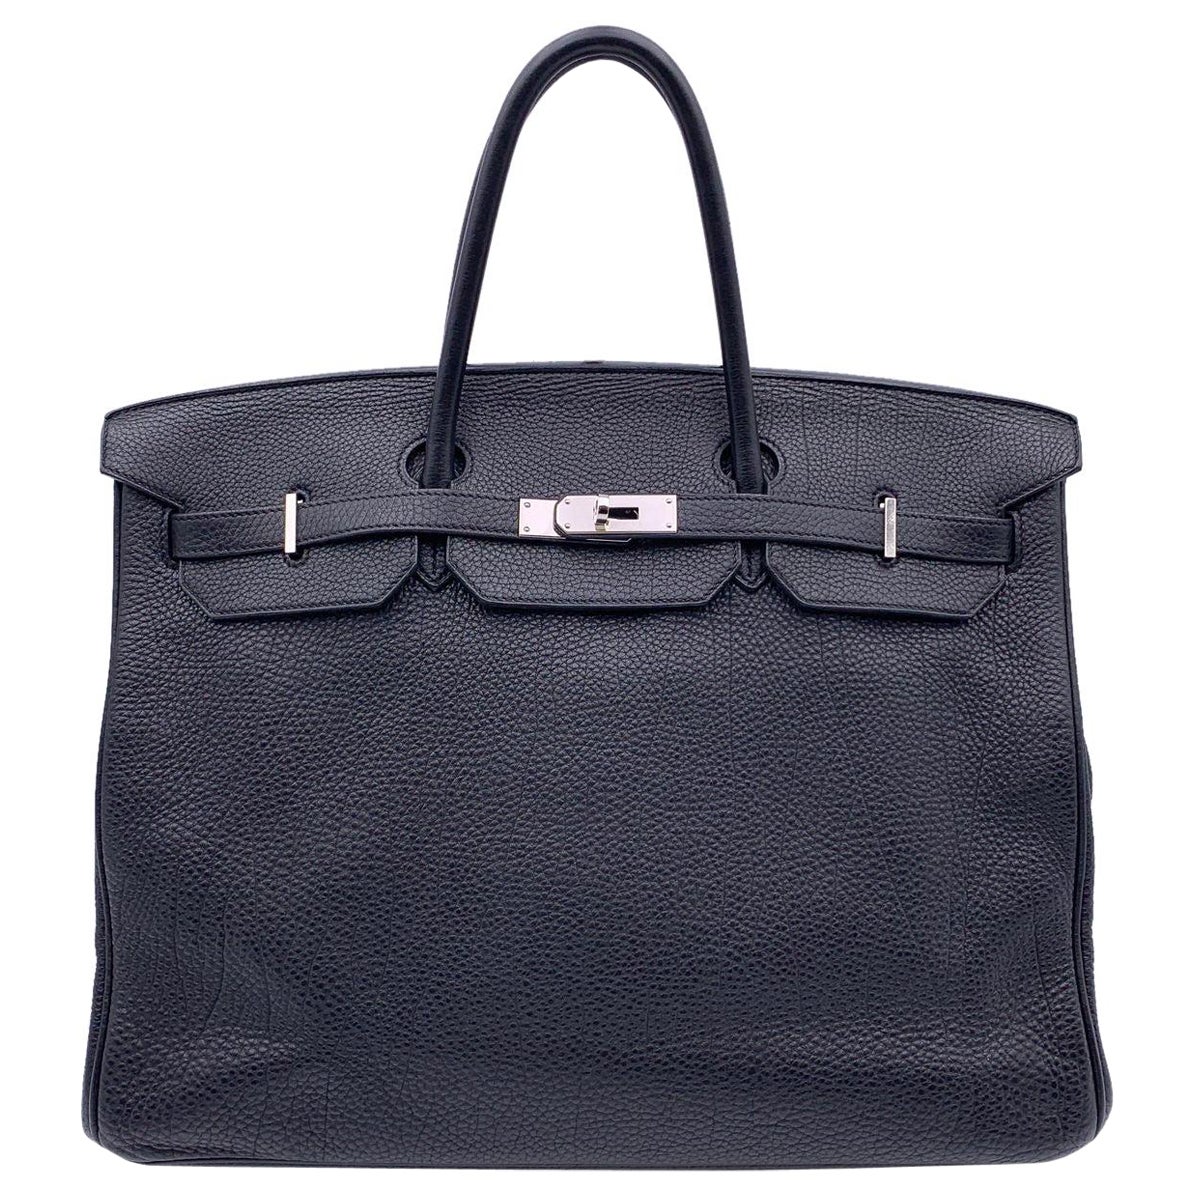 Hermes Black Togo Leather Birkin 40 Top Handle Bag Satchel Handbag